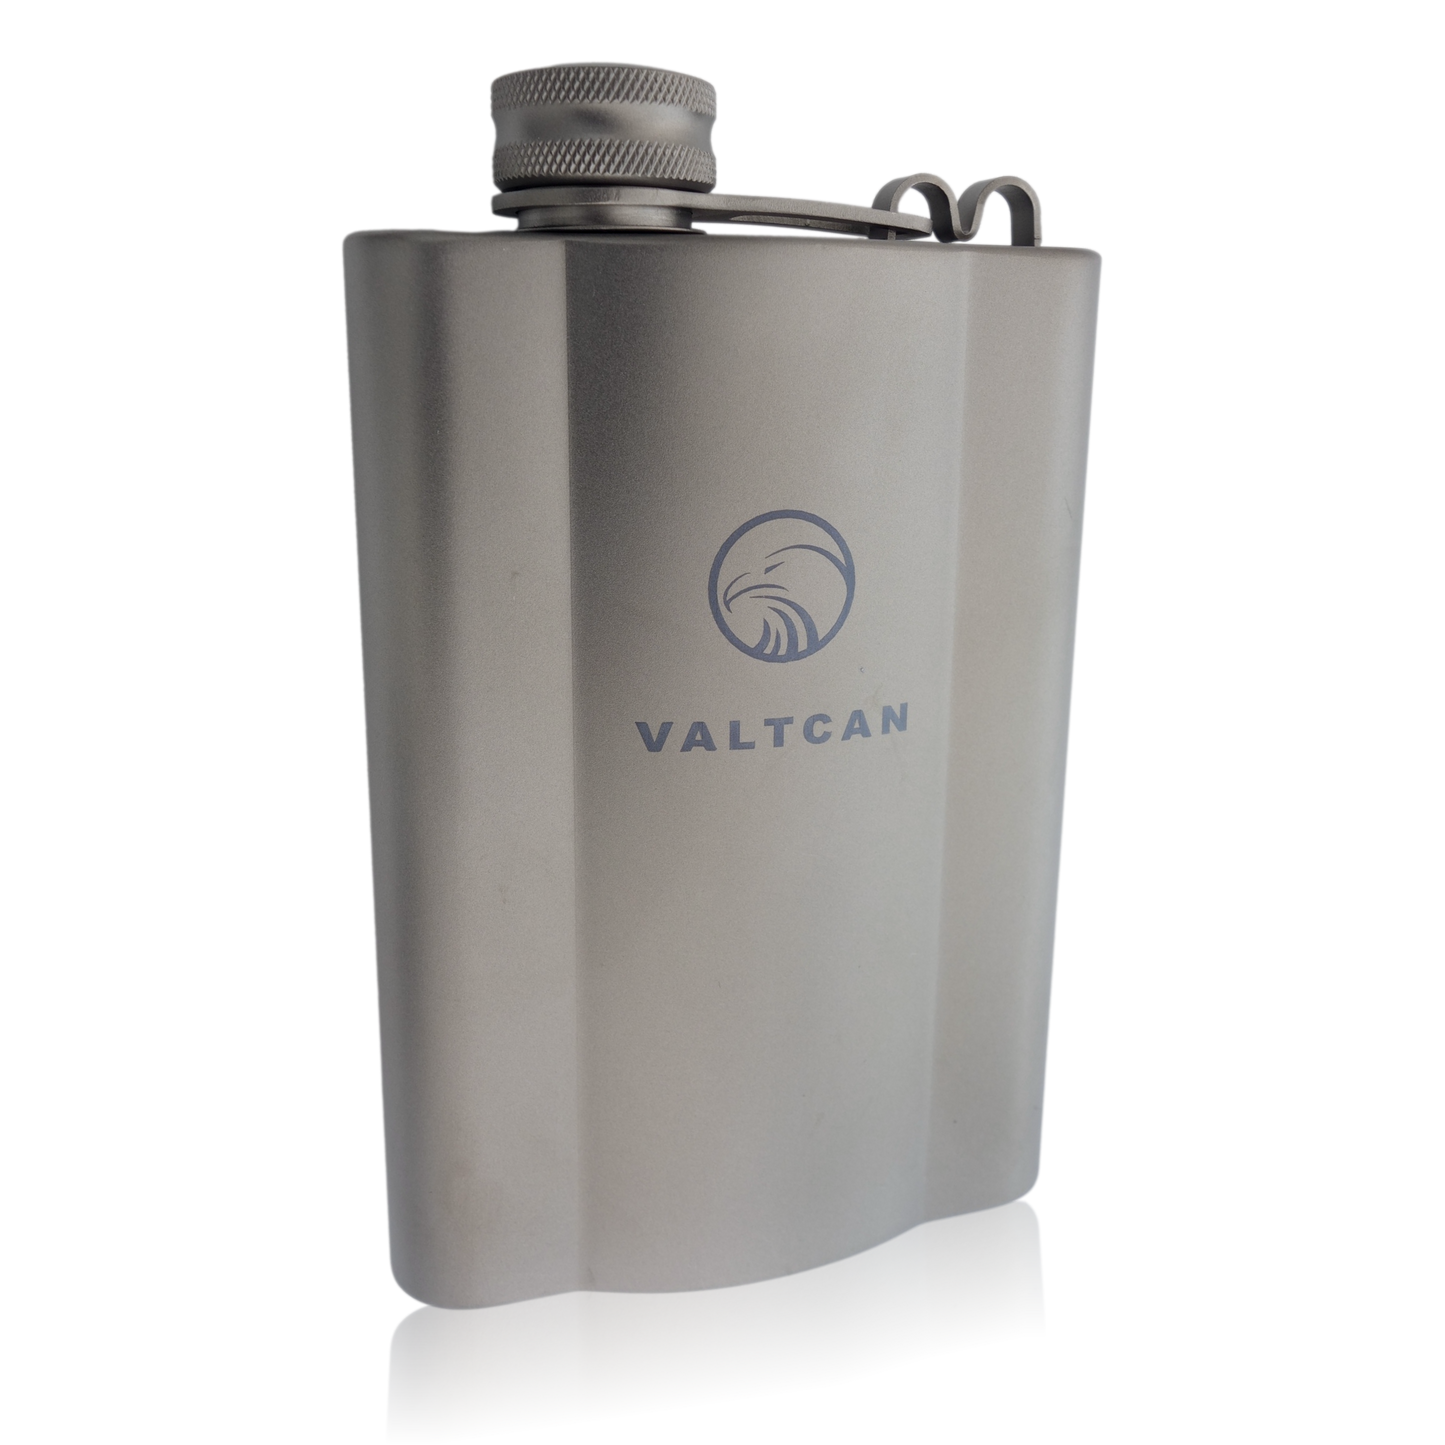 Valtcan Titanium Flask "Double Up" Ti Funnel 180ml 6 oz Capacity 144g